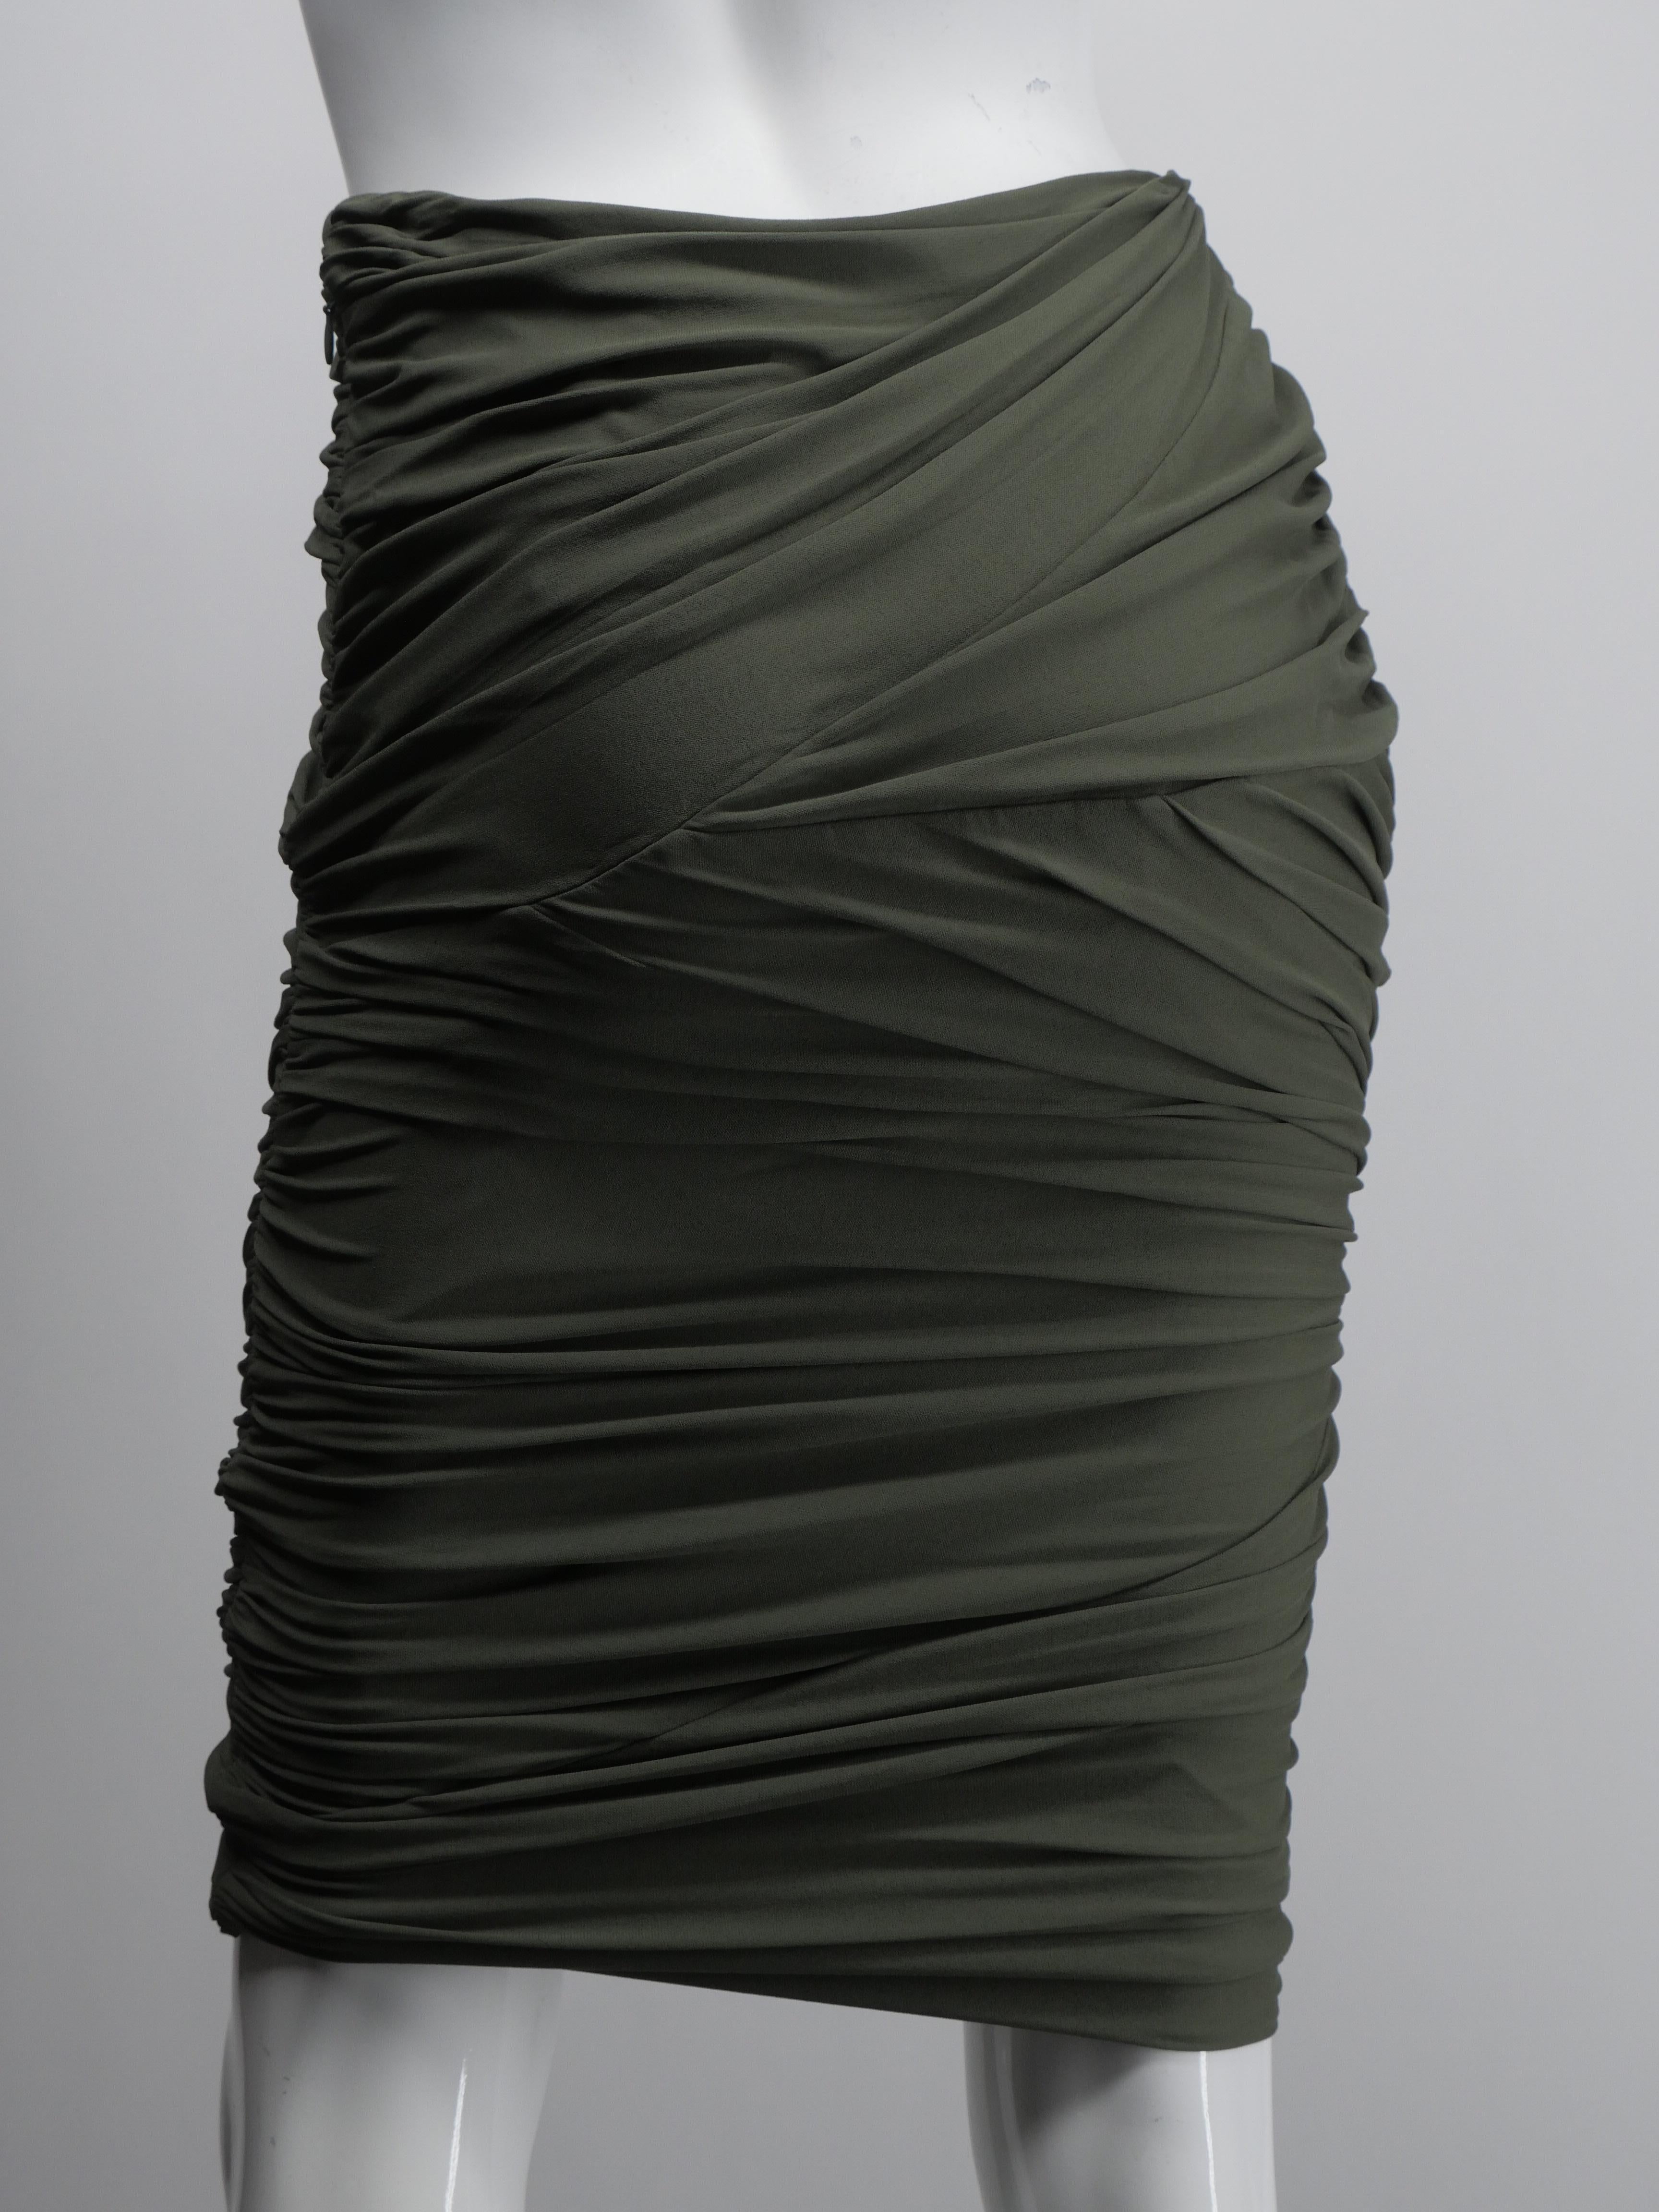 Ralph Lauren Black Label Size 6 Olive Green Ruched Skirt 5